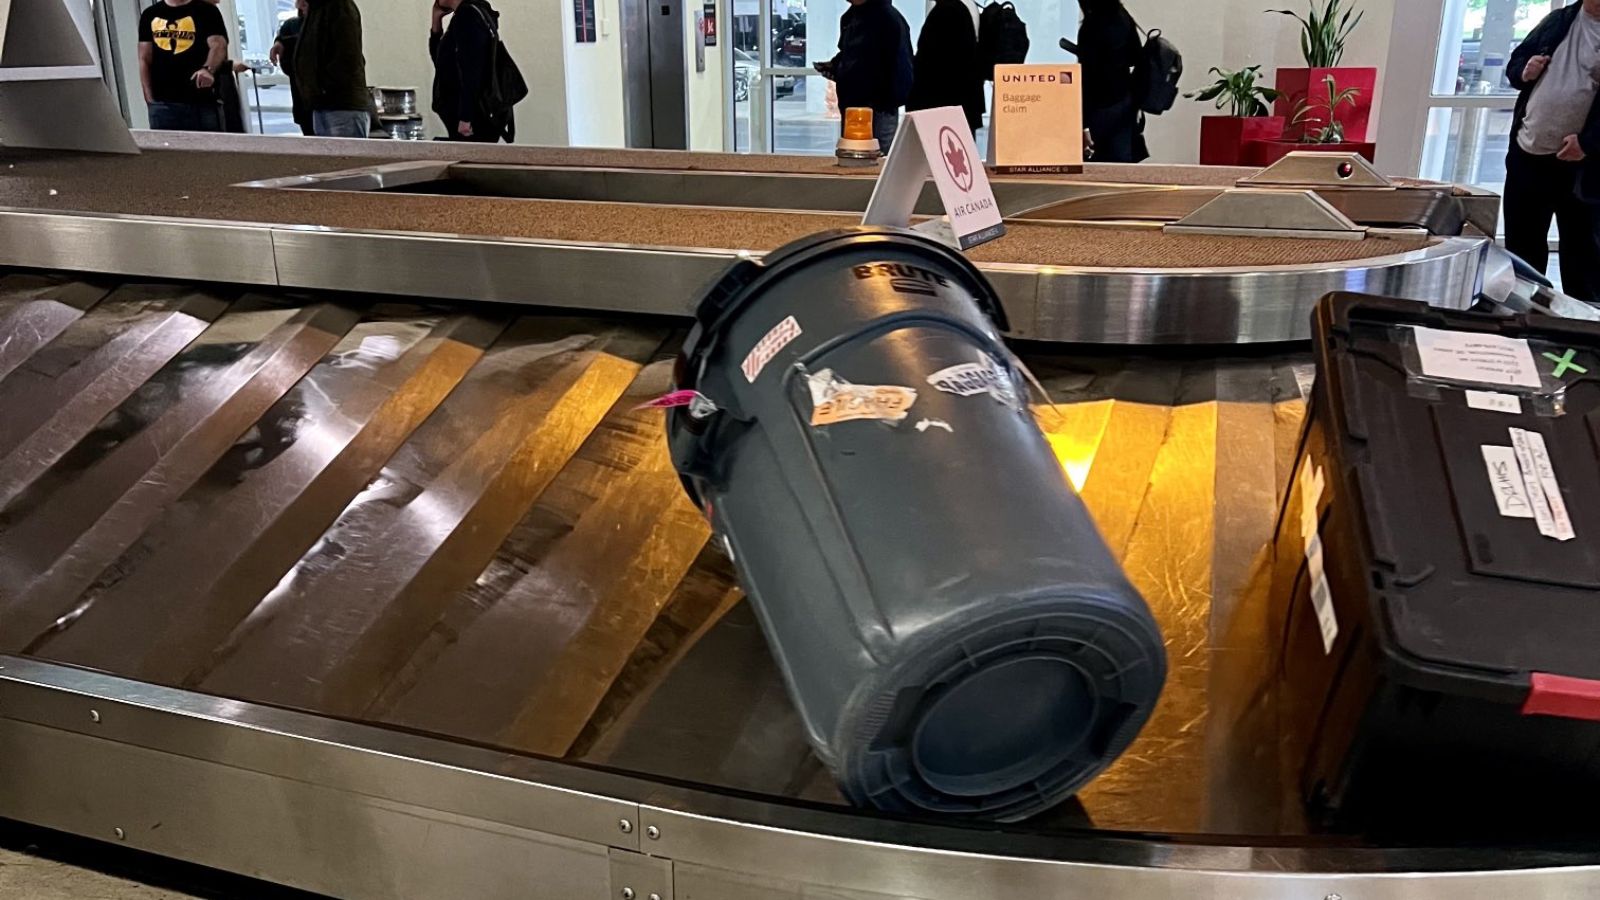 a trash can on a conveyor belt